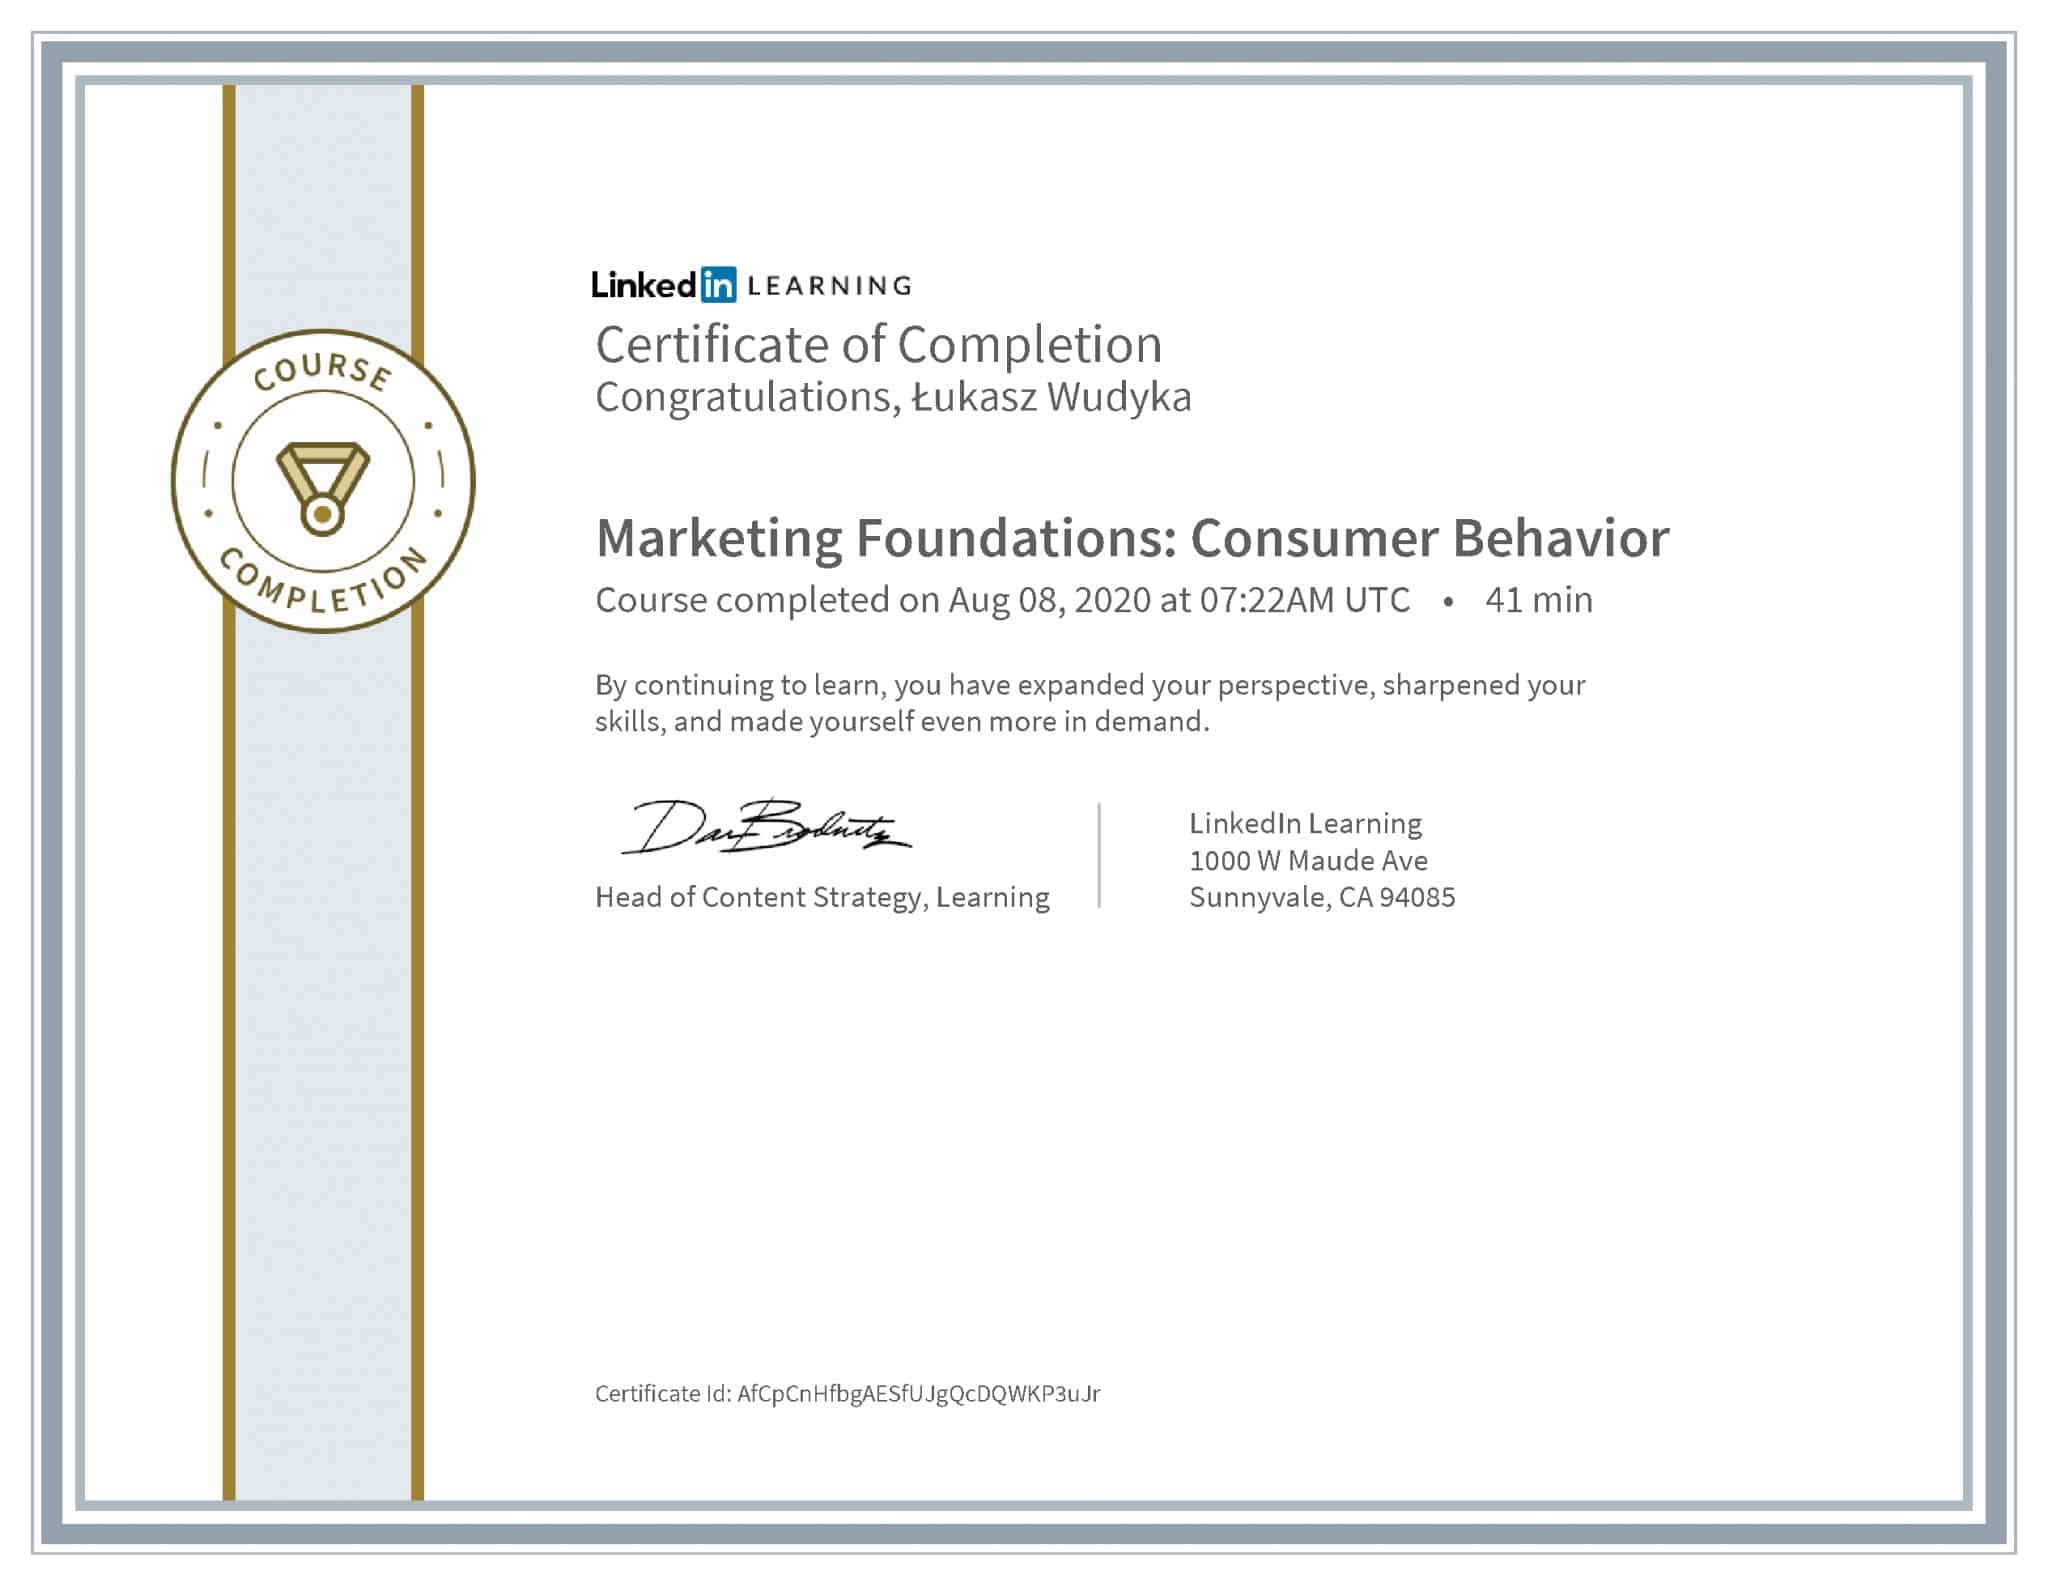 Łukasz Wudyka certyfikat LinkedIn Marketing Foundations: Consumer Behavior